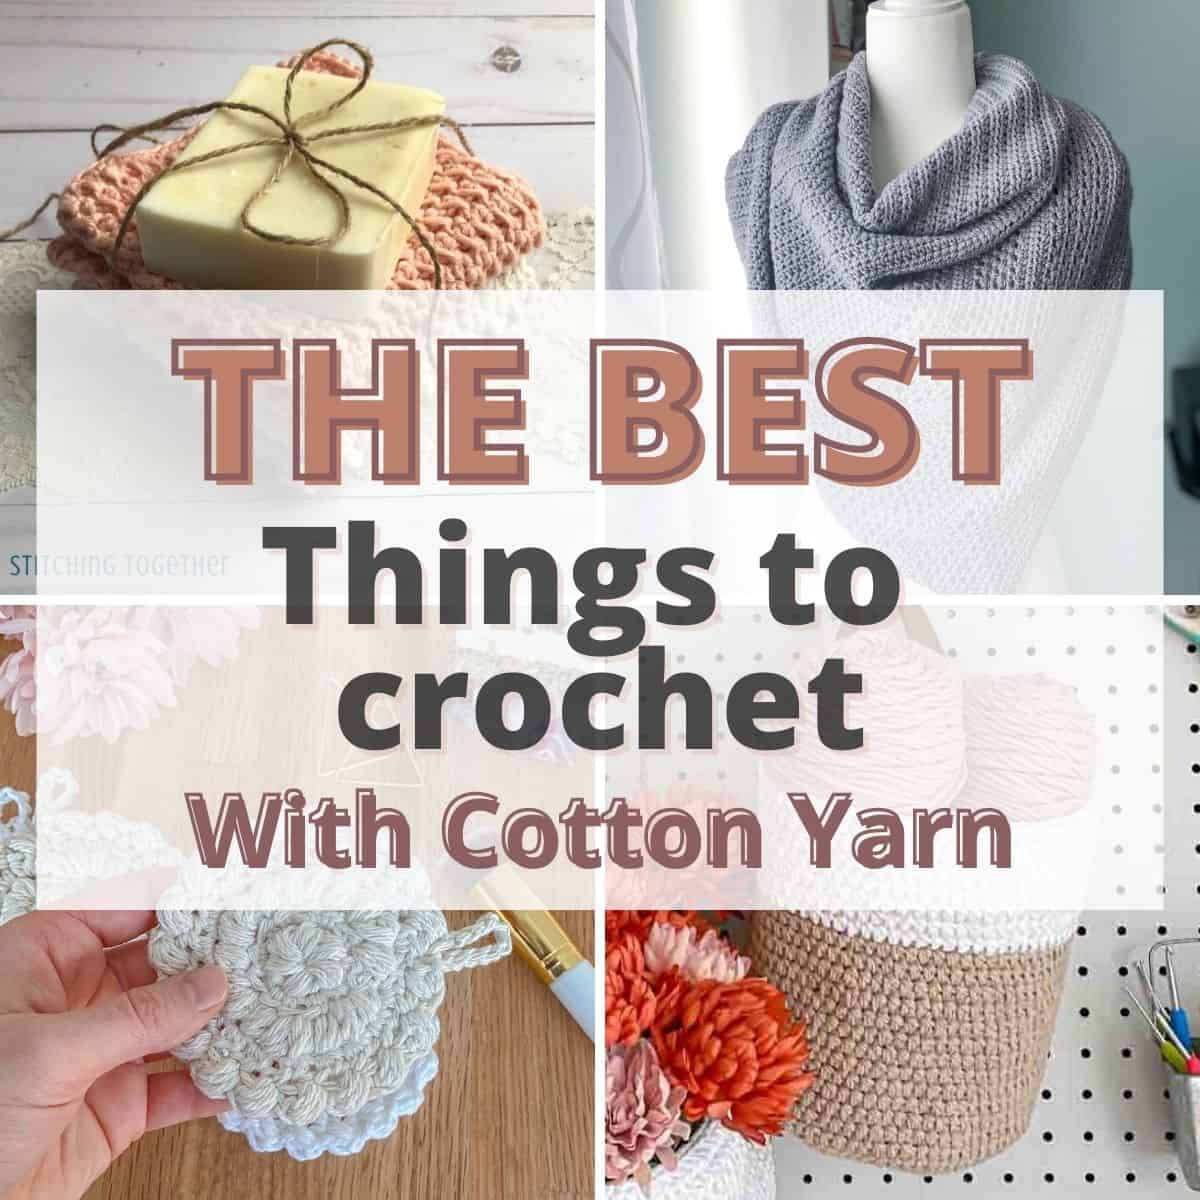  Yarn for Crocheting - Cotton Yarn for Crocheting